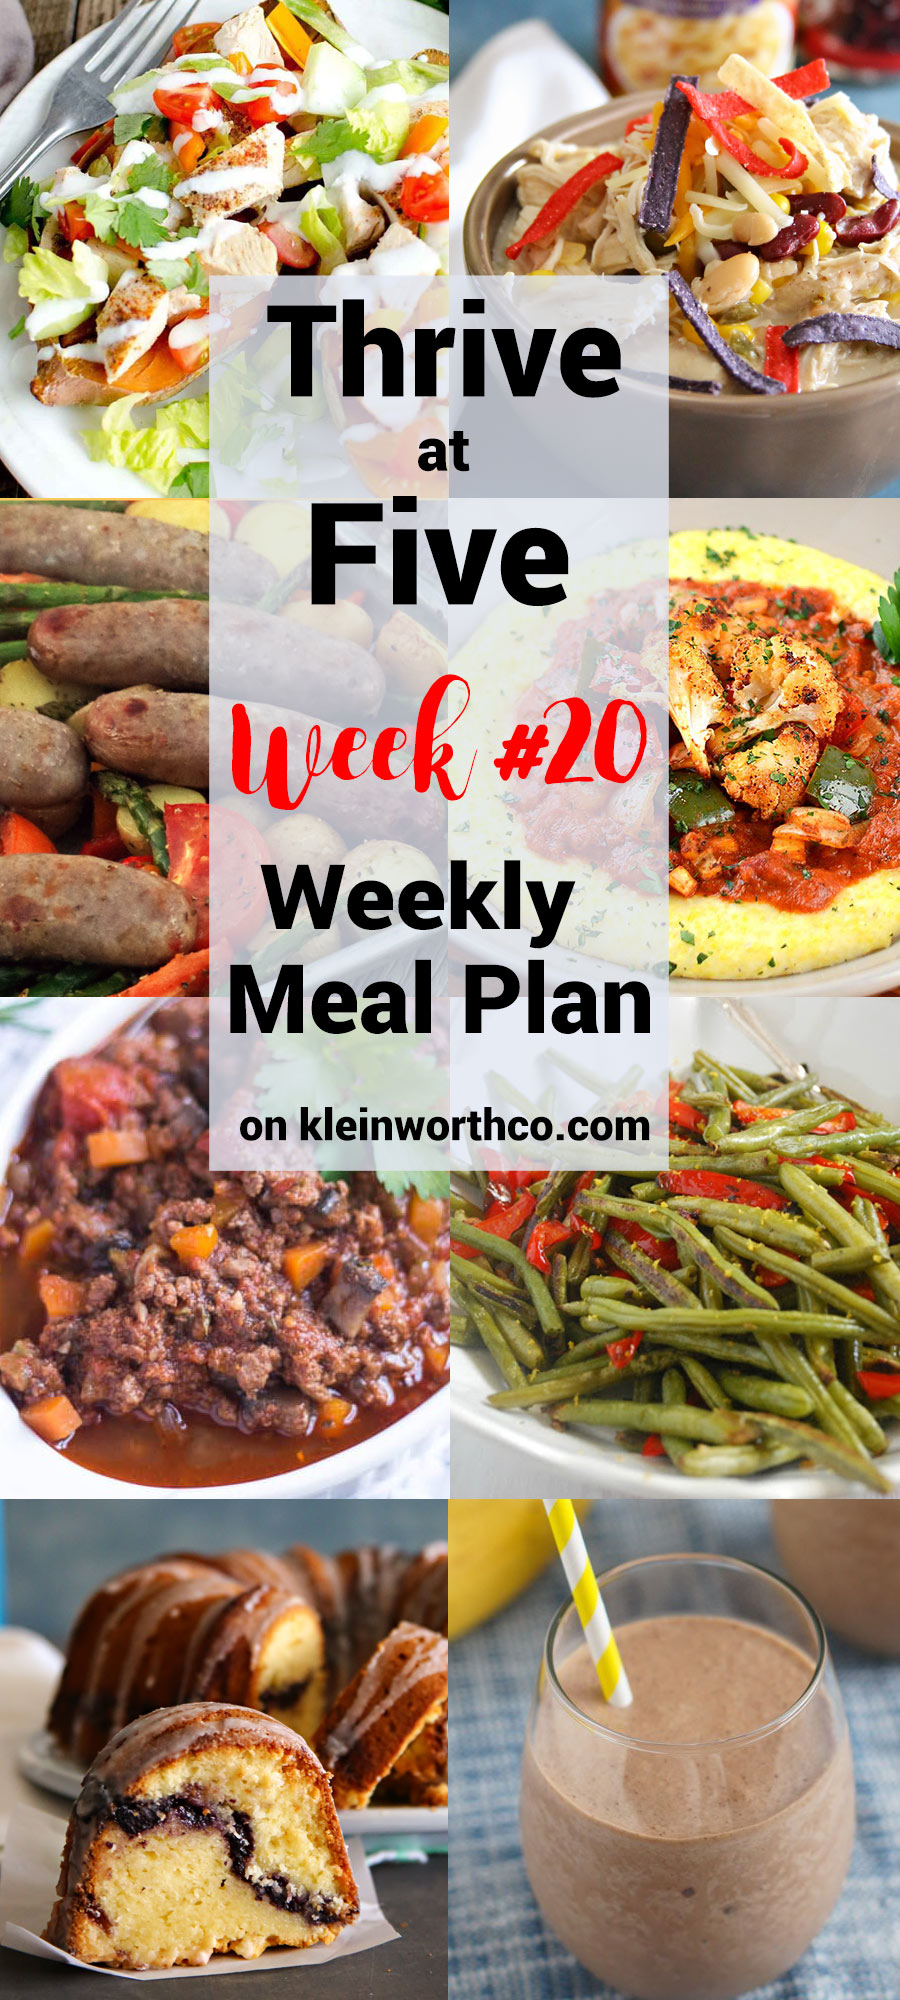 Thrive at Five Meal Plan Week 20